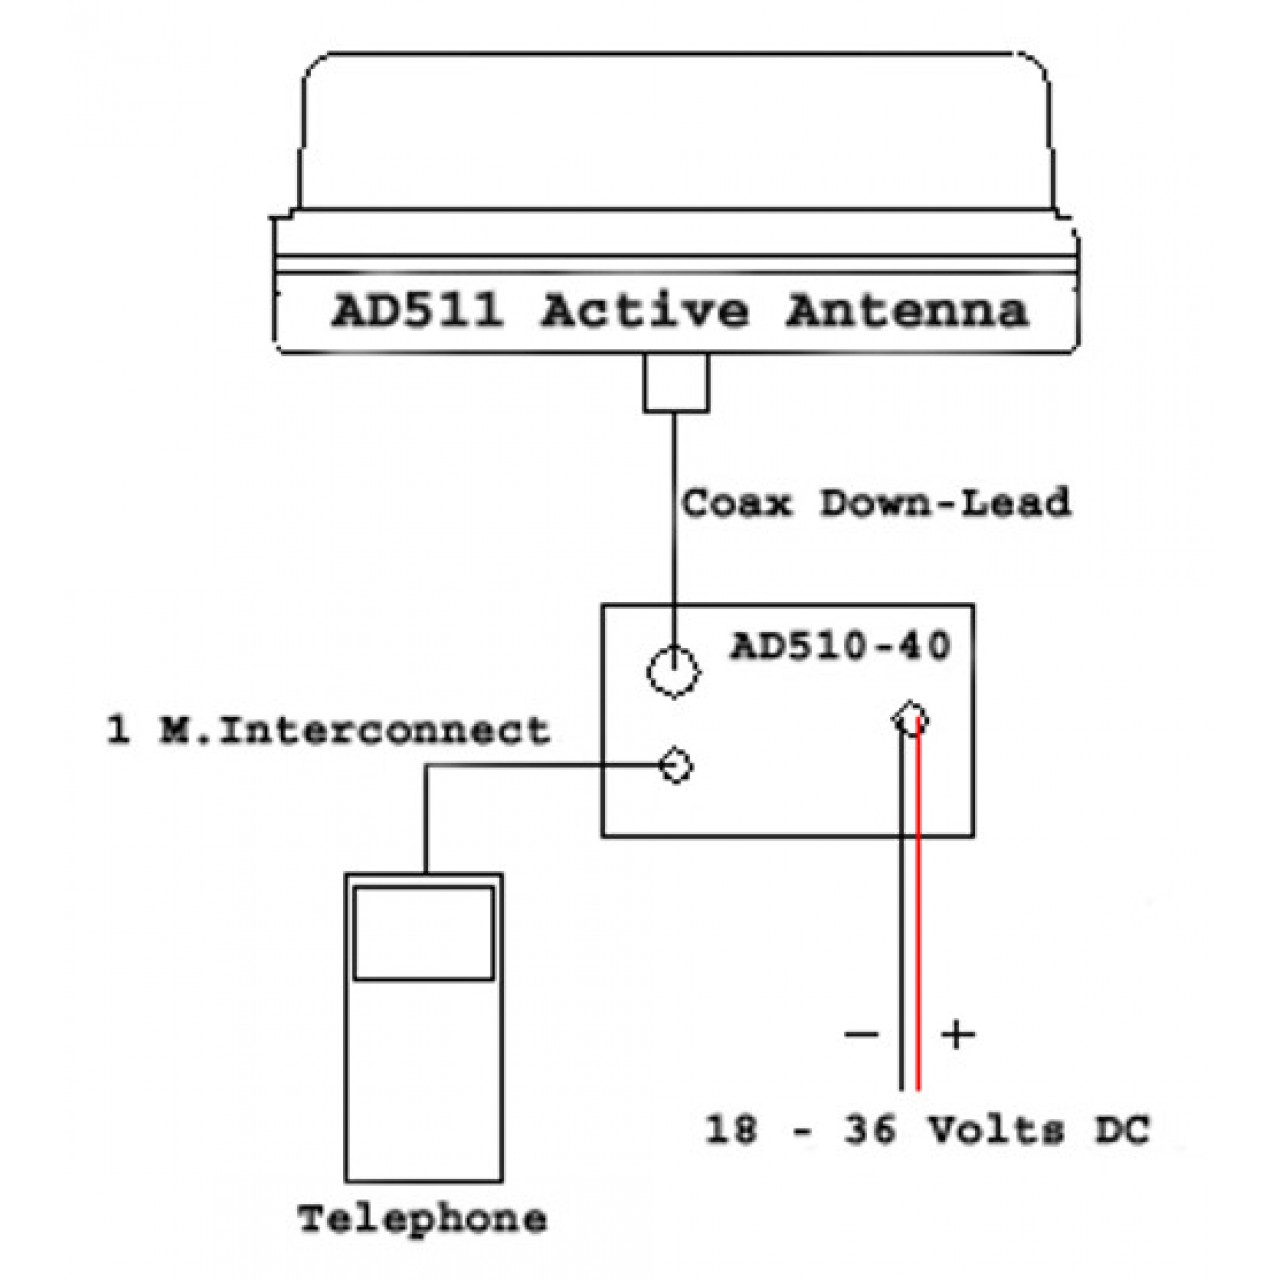 AH-AD511 Antennas - ICOM